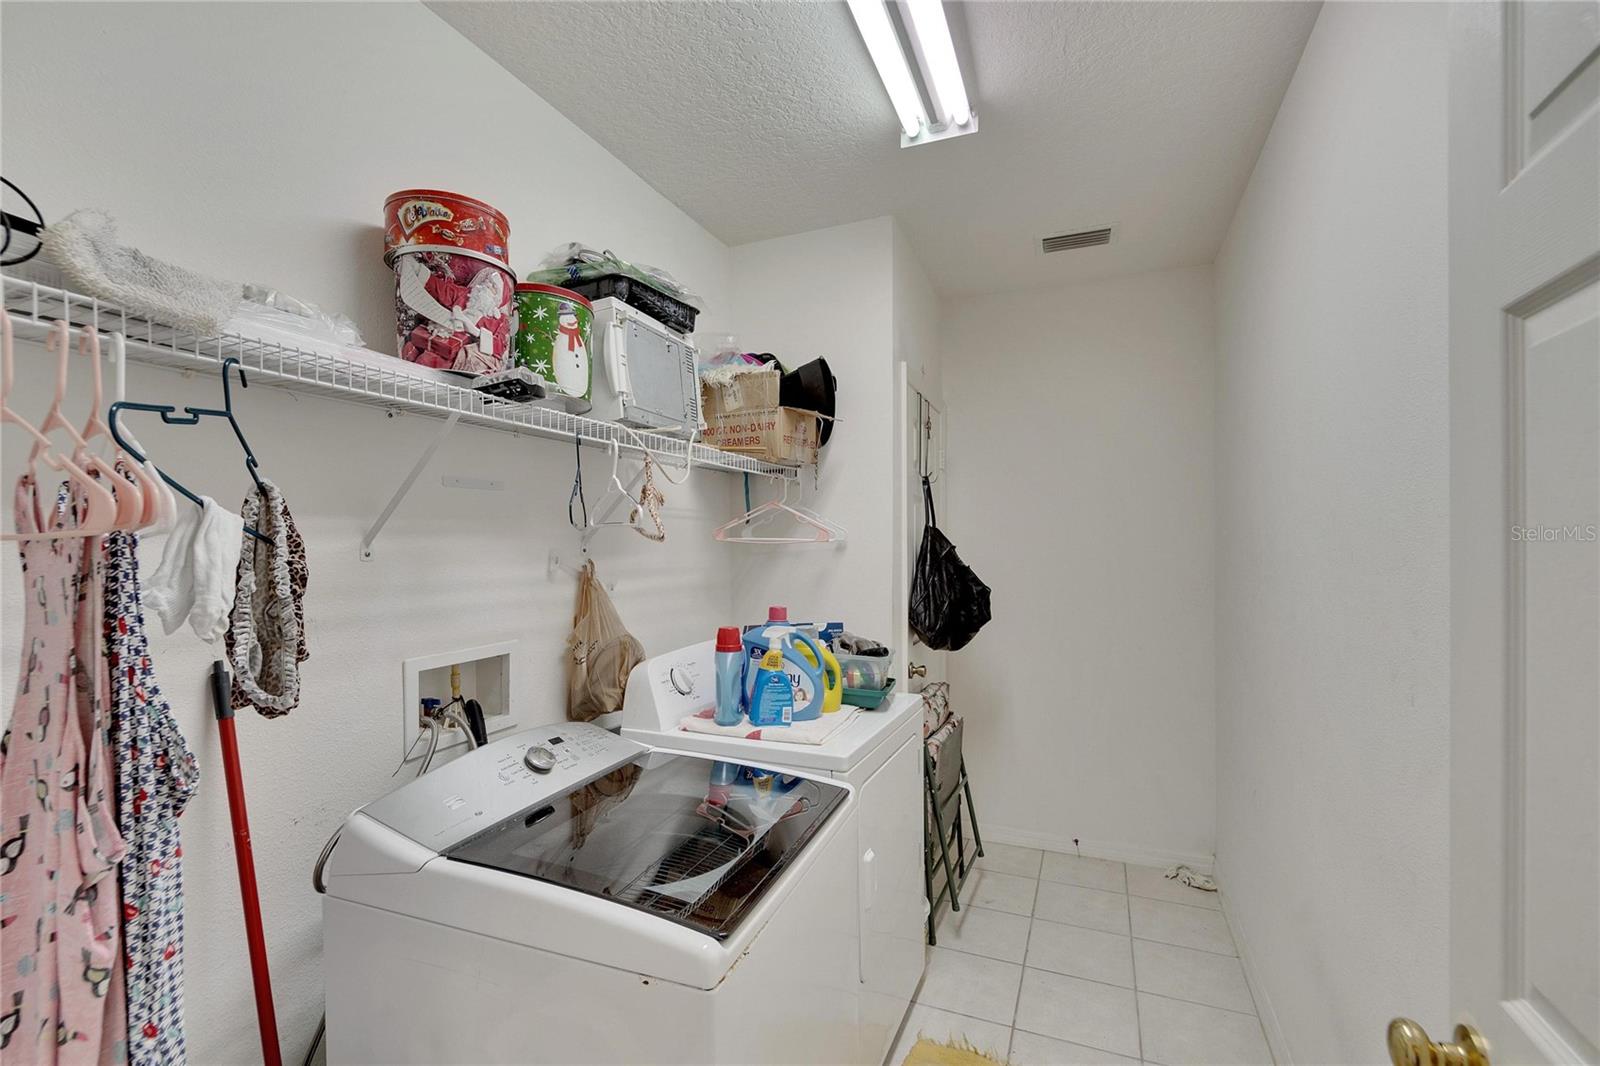 Laundry Room with Closet